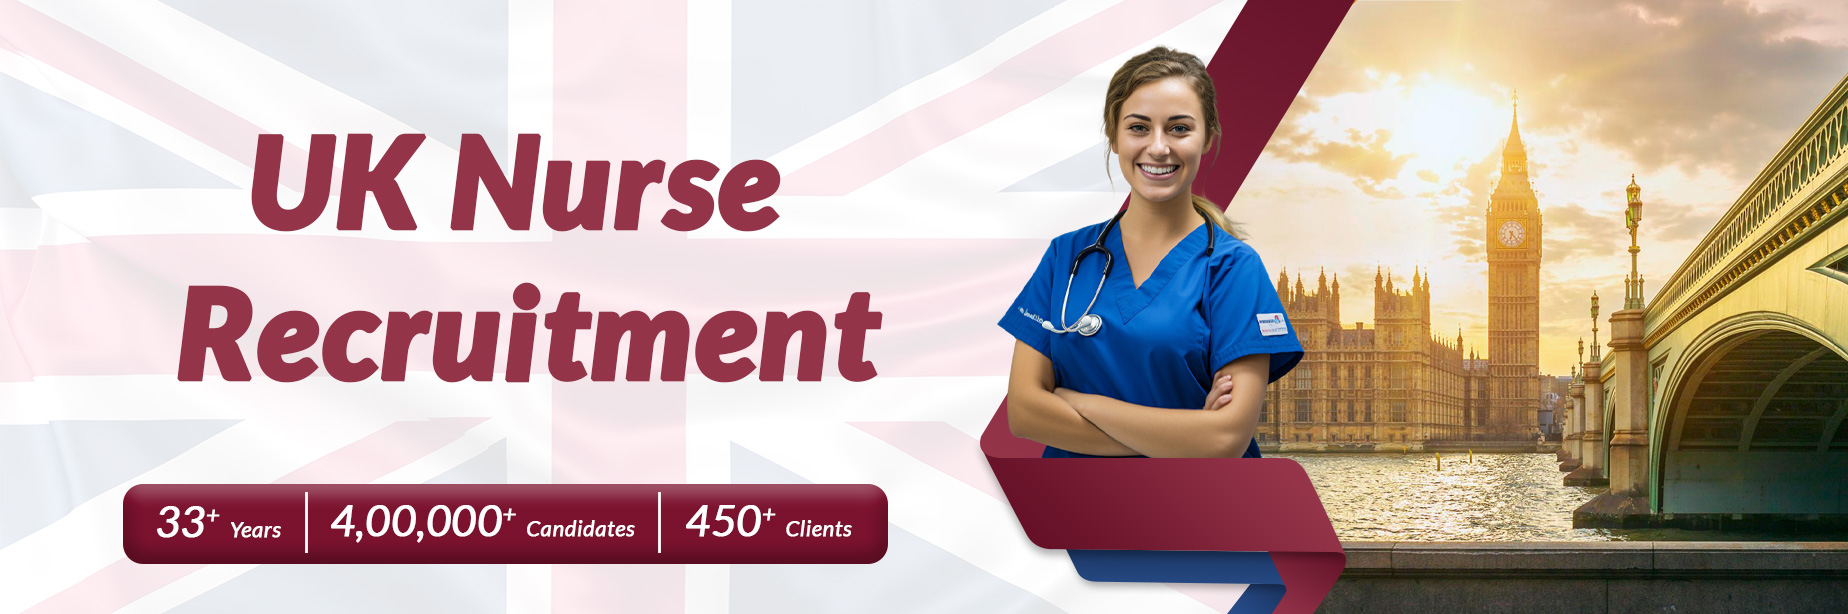 UK Nurse Recruitment